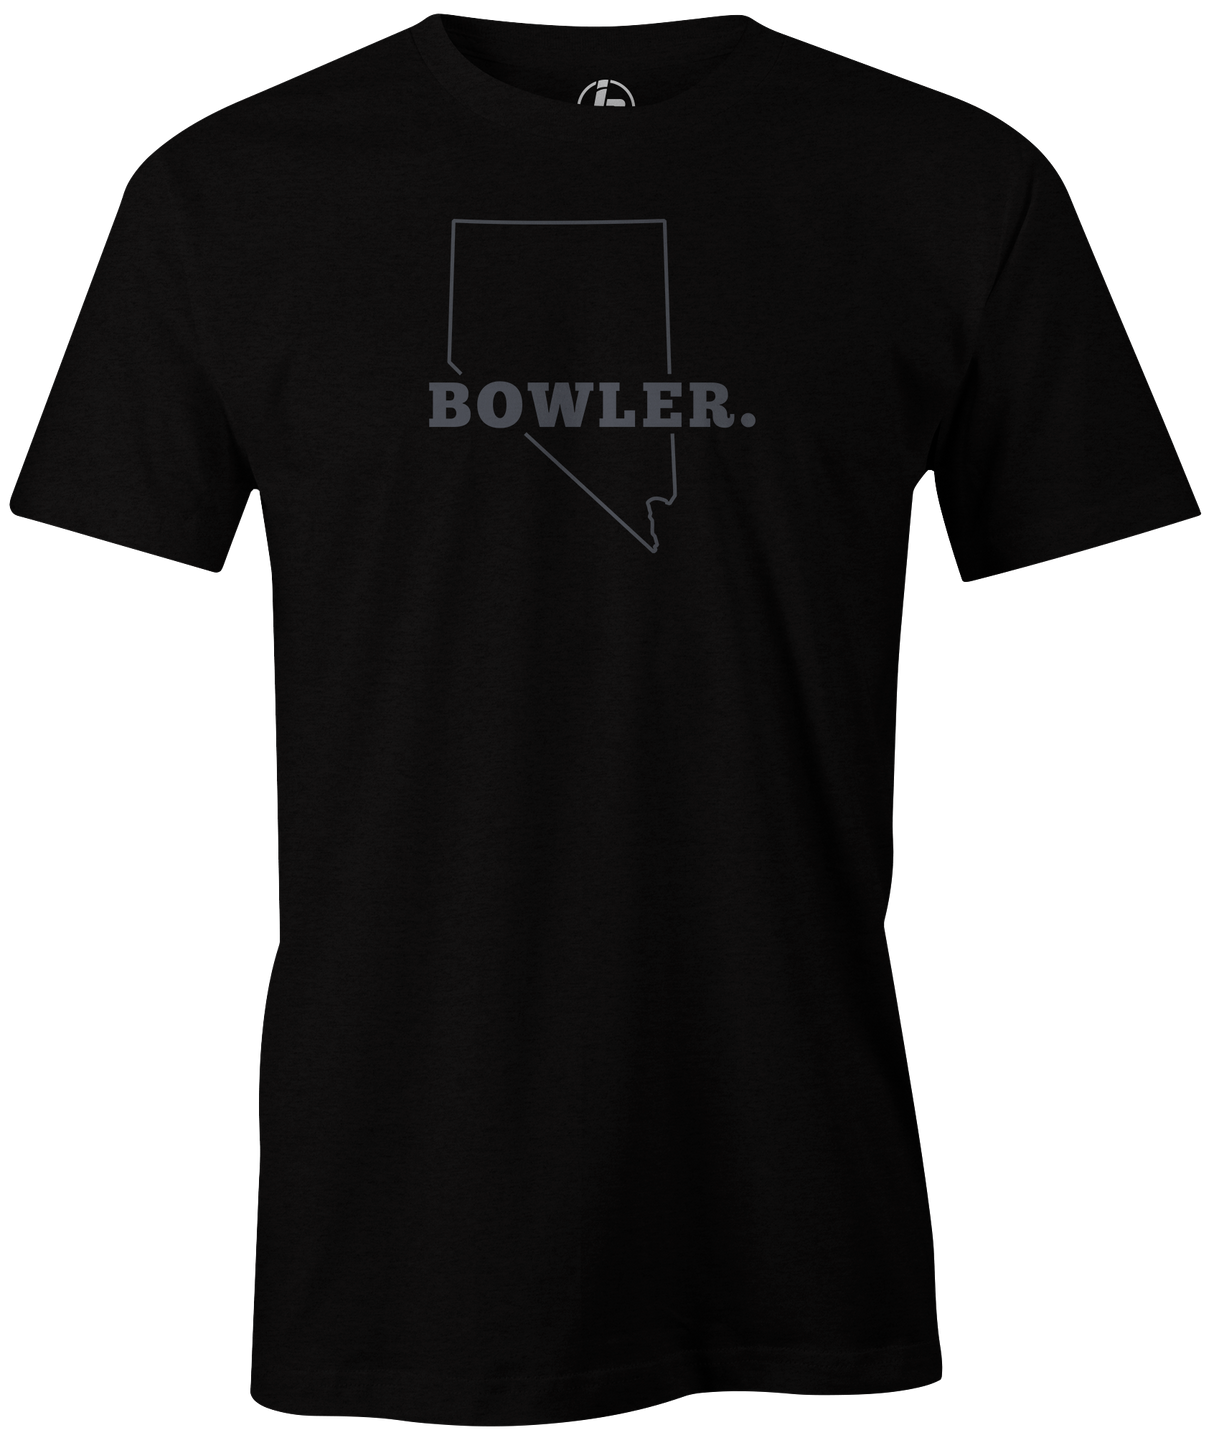 Nevada State Men's Bowling T-shirt, Black, Cool, novelty, tshirt, tee, tee-shirt, tee shirt, teeshirt, team, comfortable